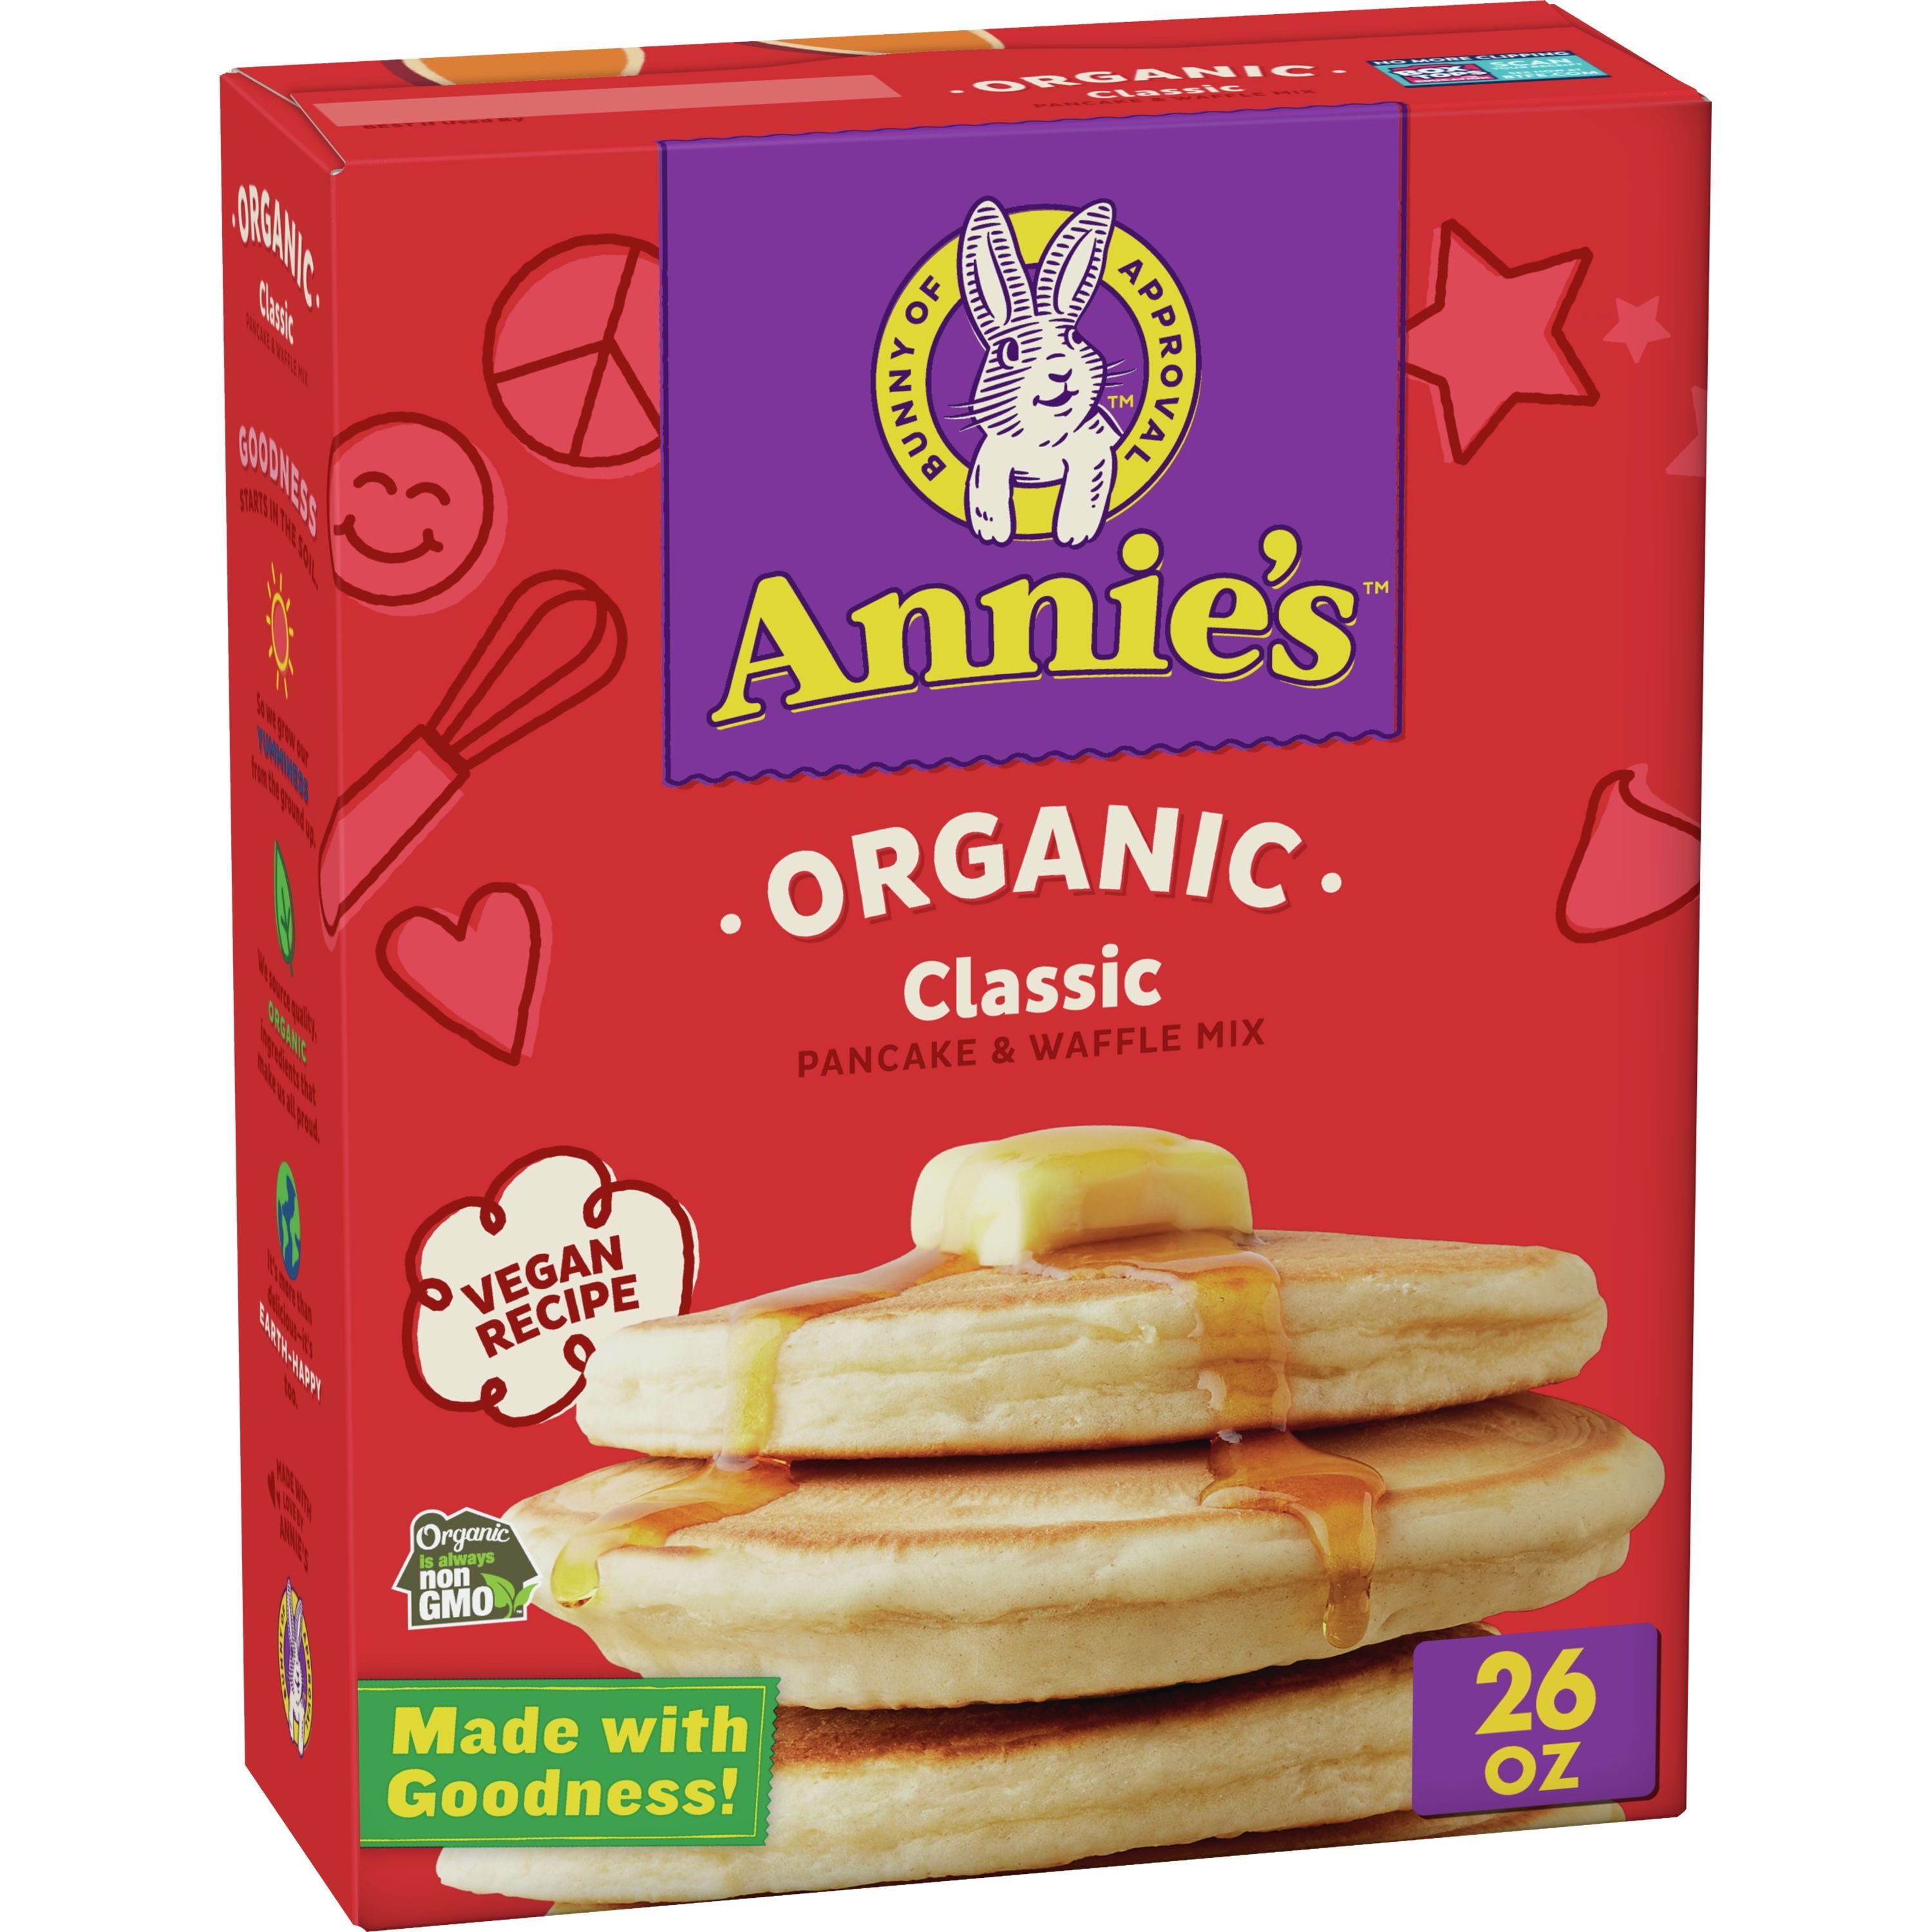 Annies Organic Classic Pancake and Waffle Mix, 26 oz